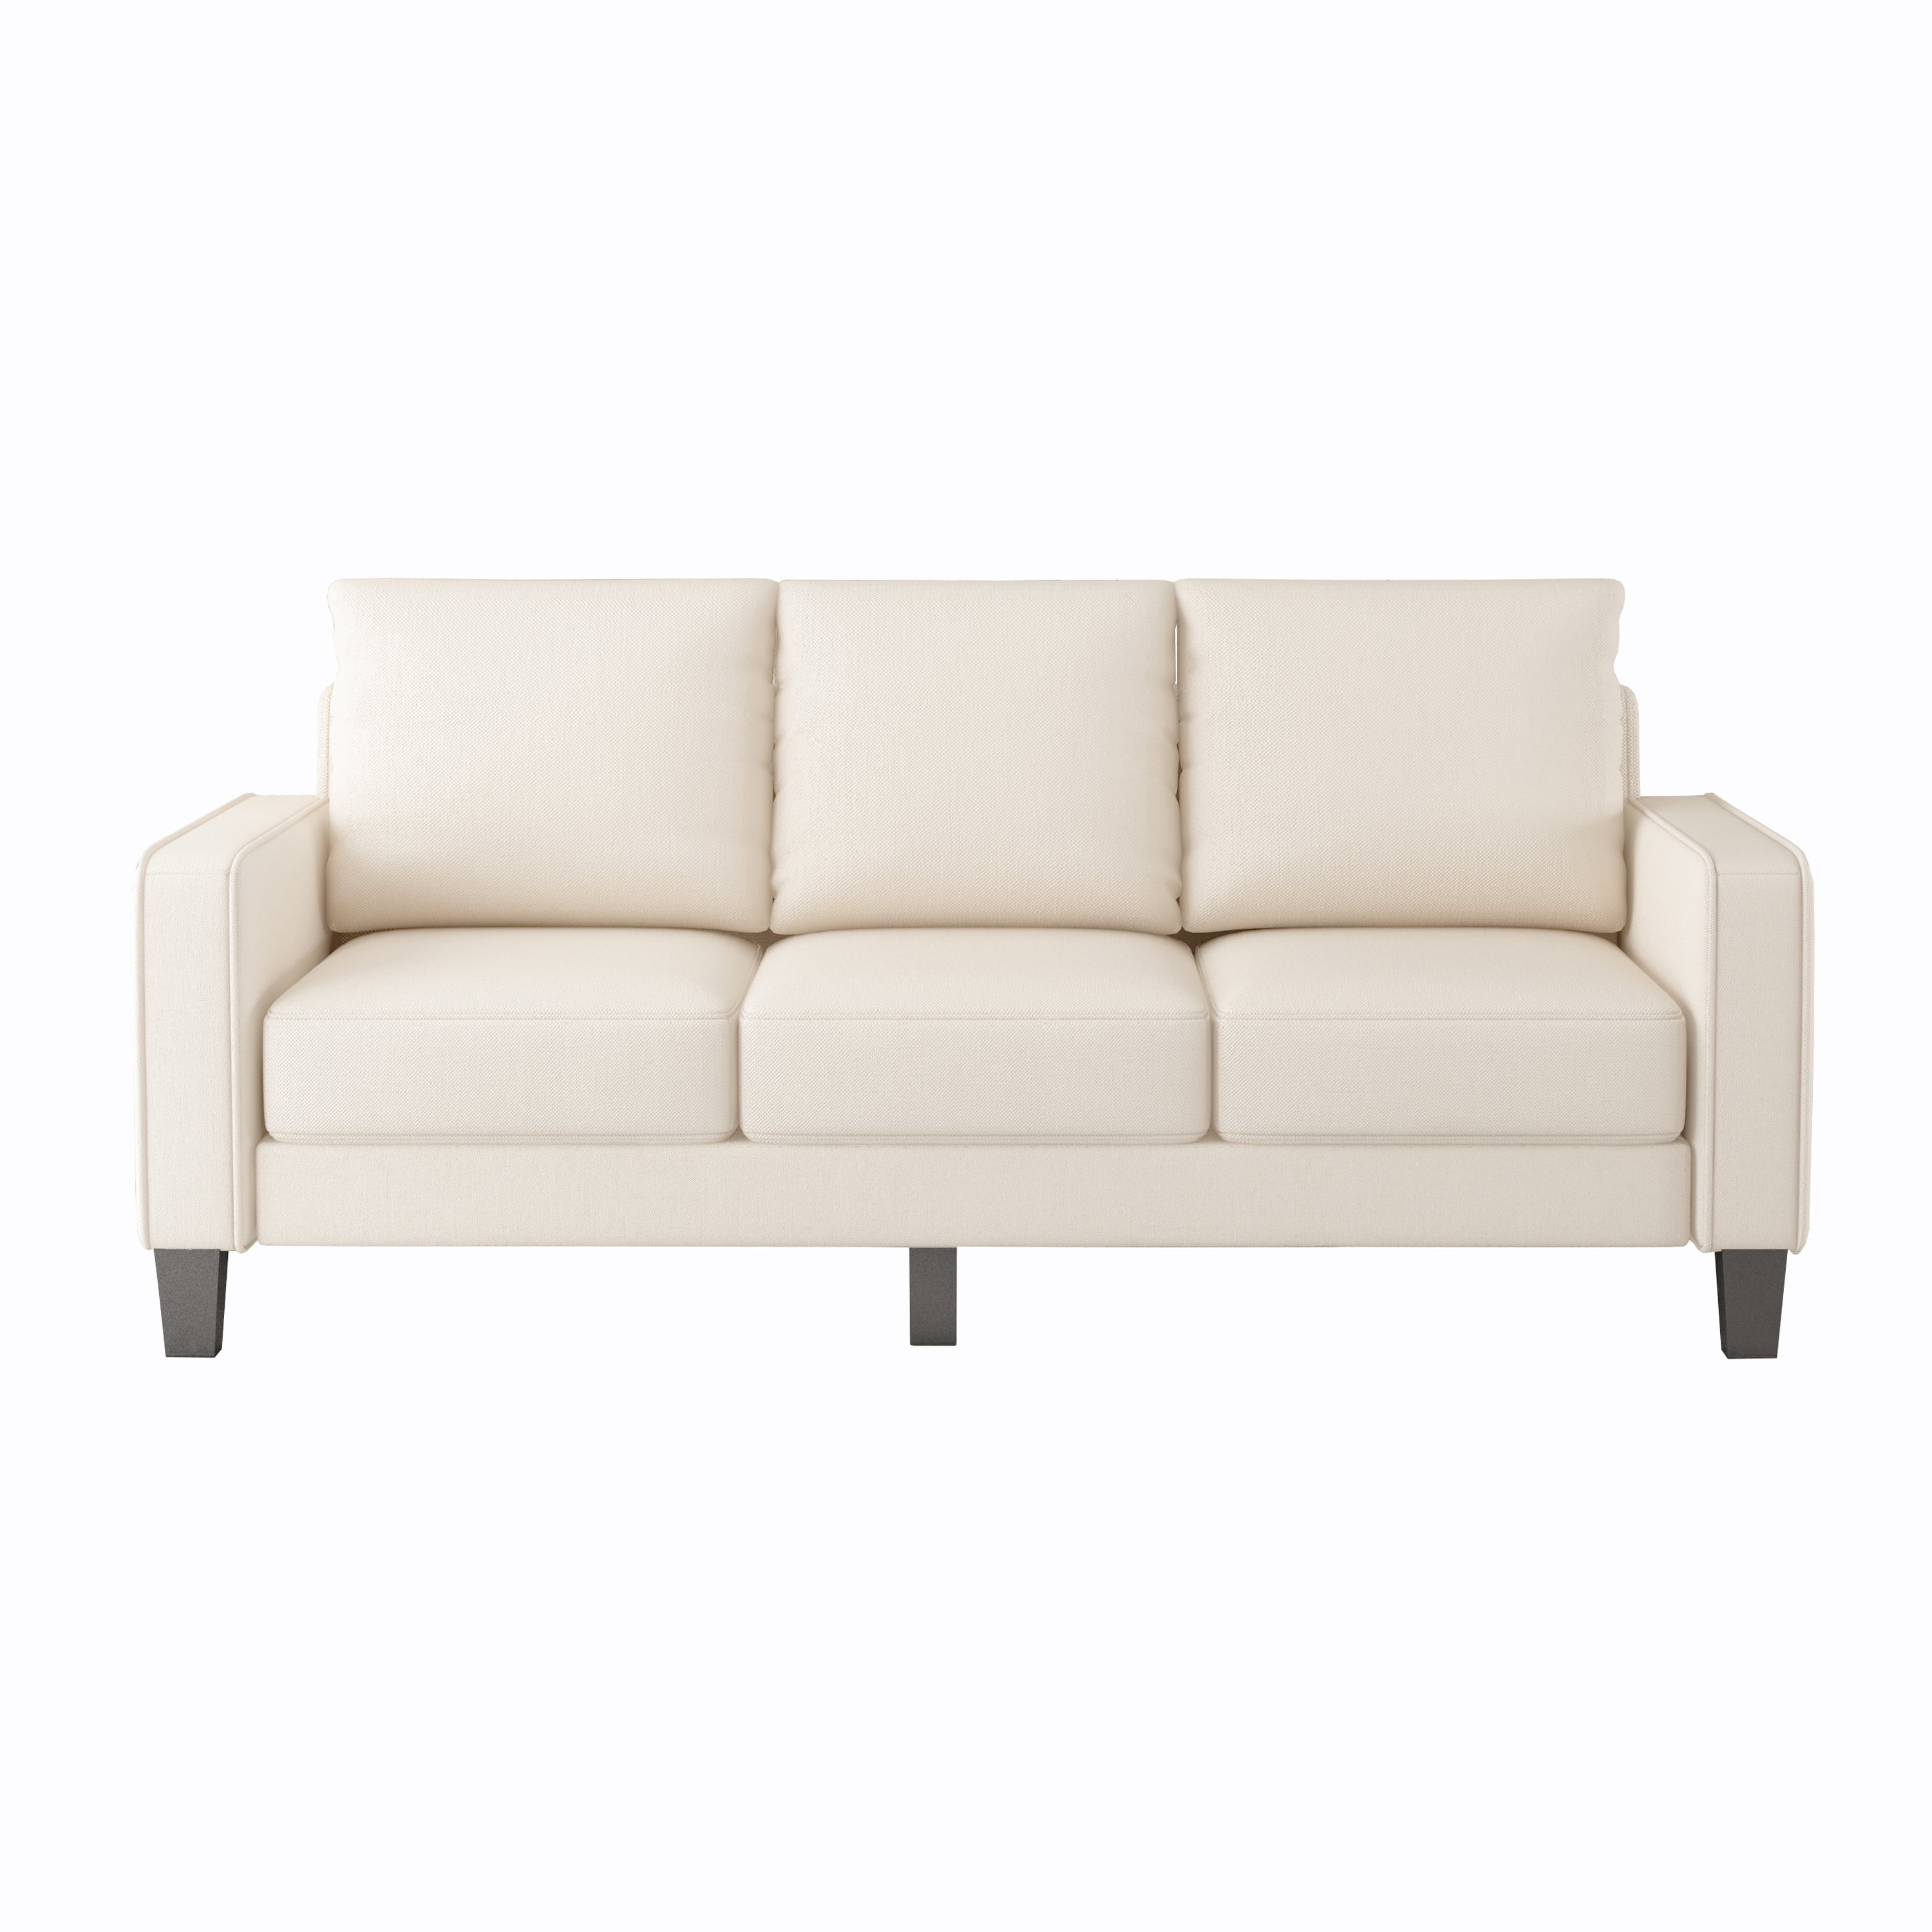 Behov for Rejse kit AUKFA 3-Seater Sofa - Modern Living Room Furniture Sofa in Beige Fabric -  Walmart.com